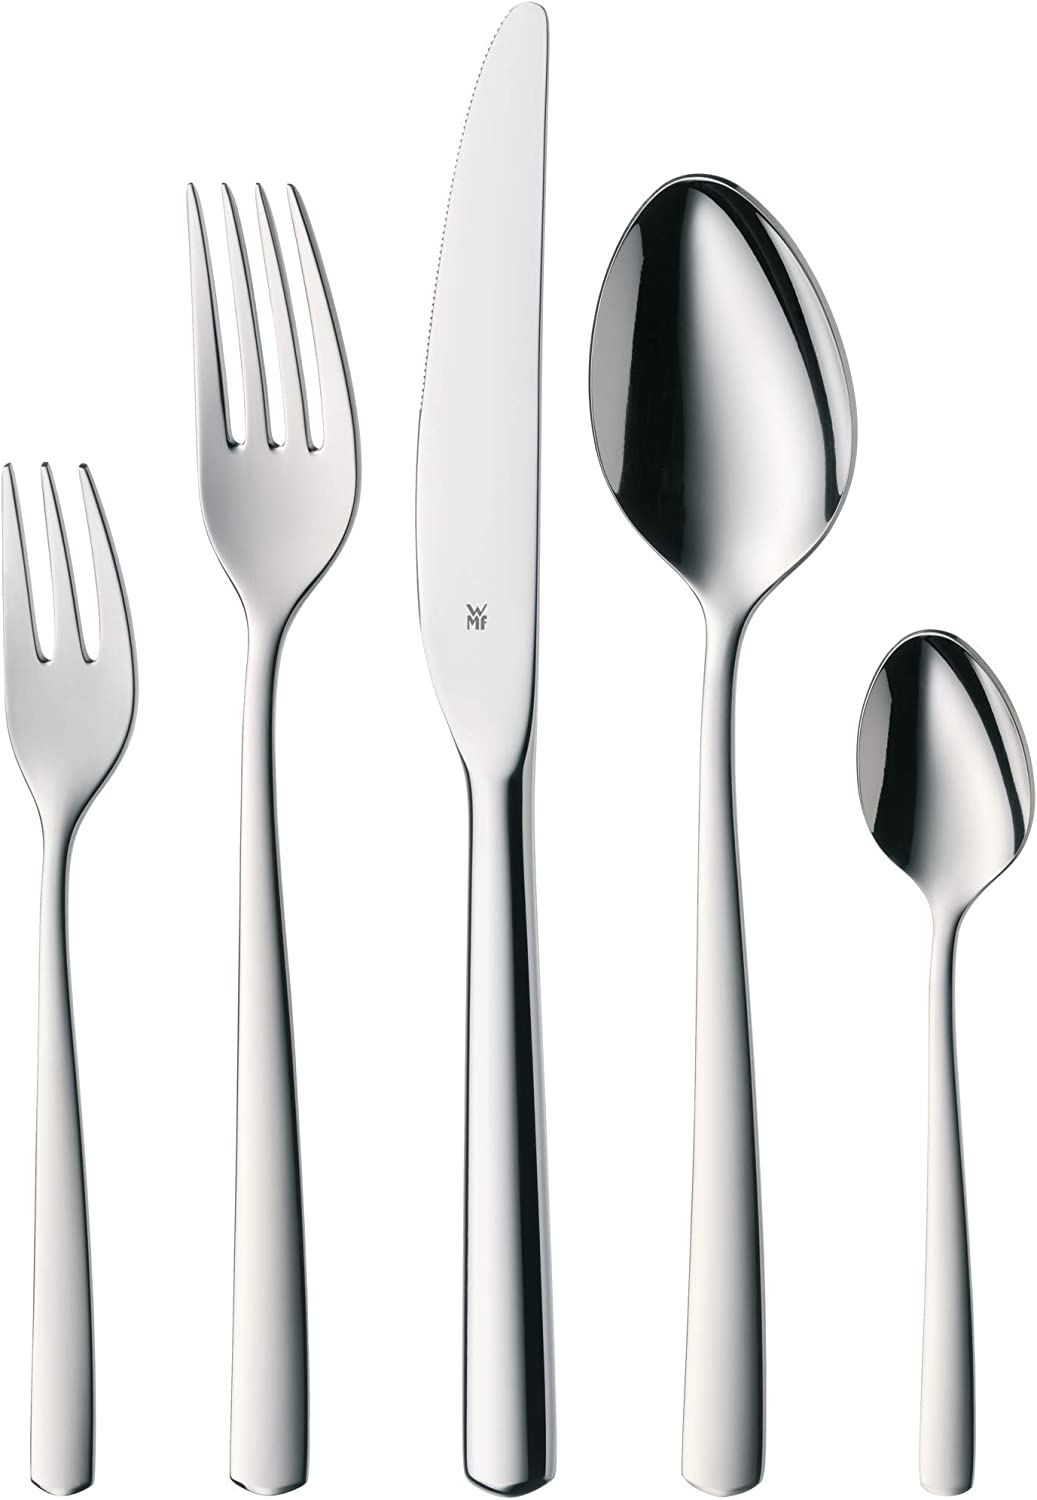 WMF Boston cutlery set 12 people, cutlery 60 pieces, monobloc knife, Cromargan stainless steel polished, shiny, dishwasher-safe